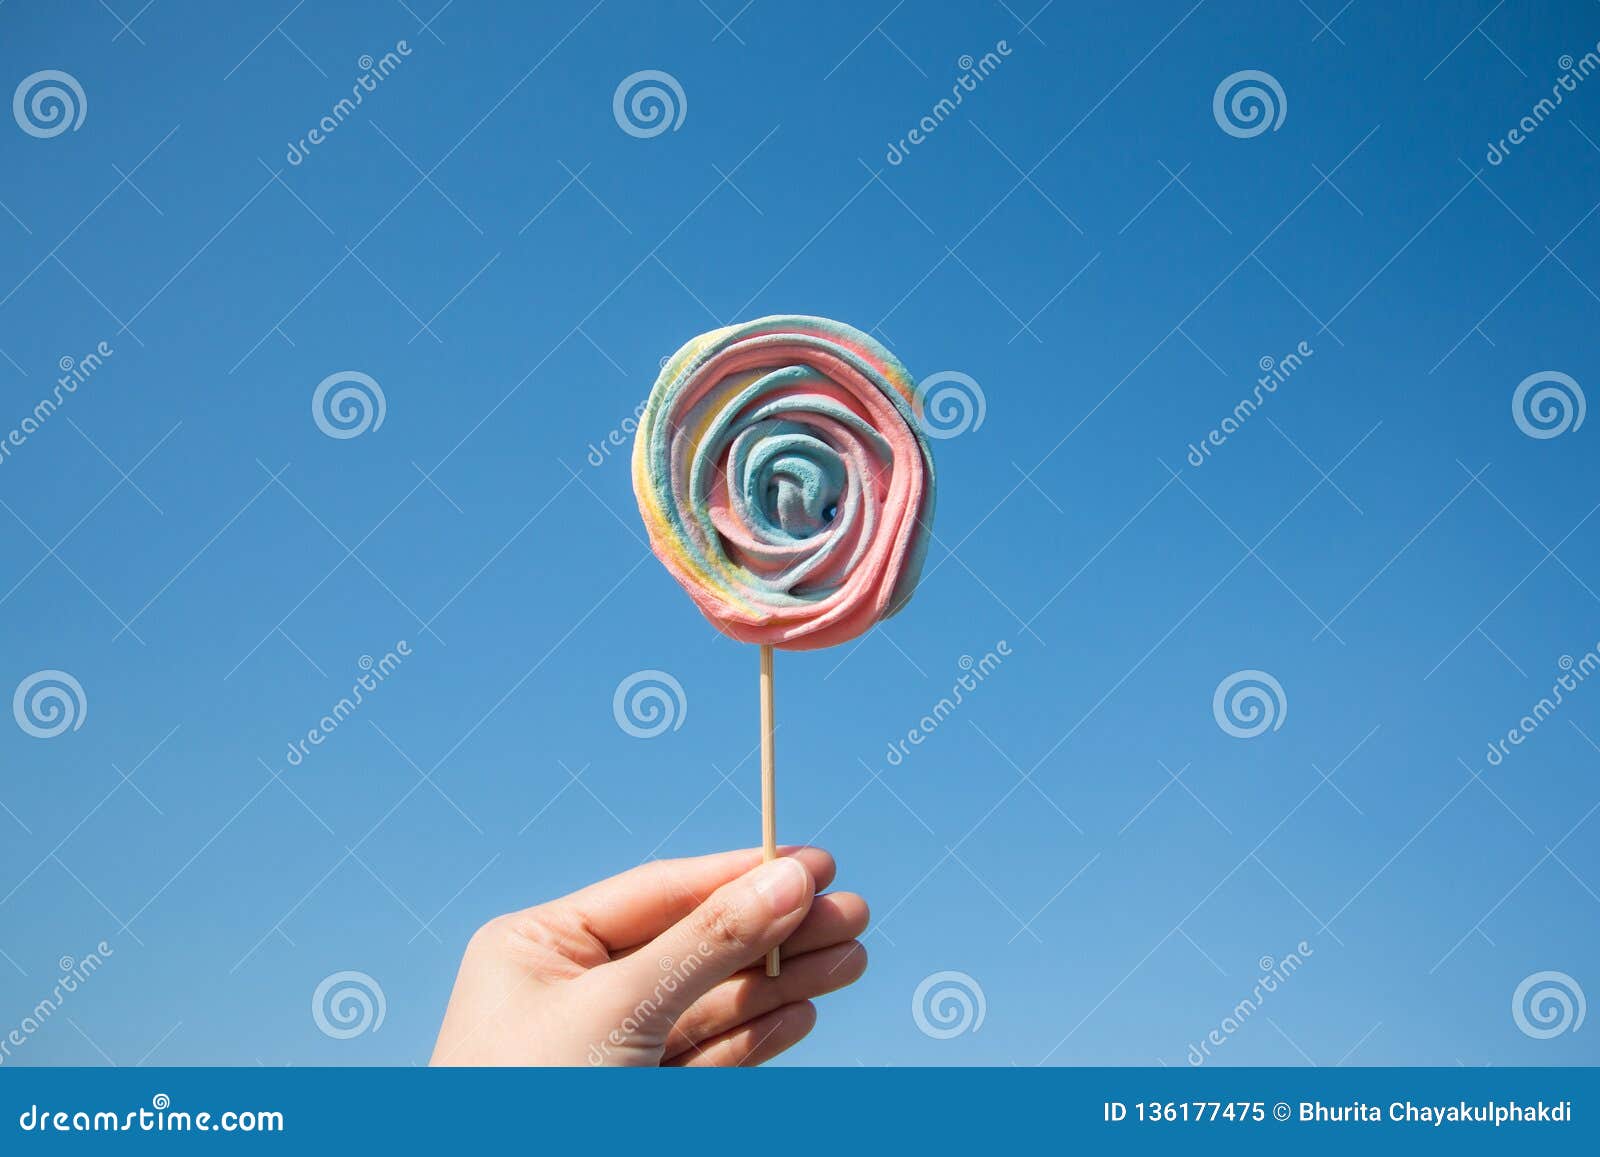 Lollipop Candy On Blue Sky Background Stock Image - Image of dessert ...